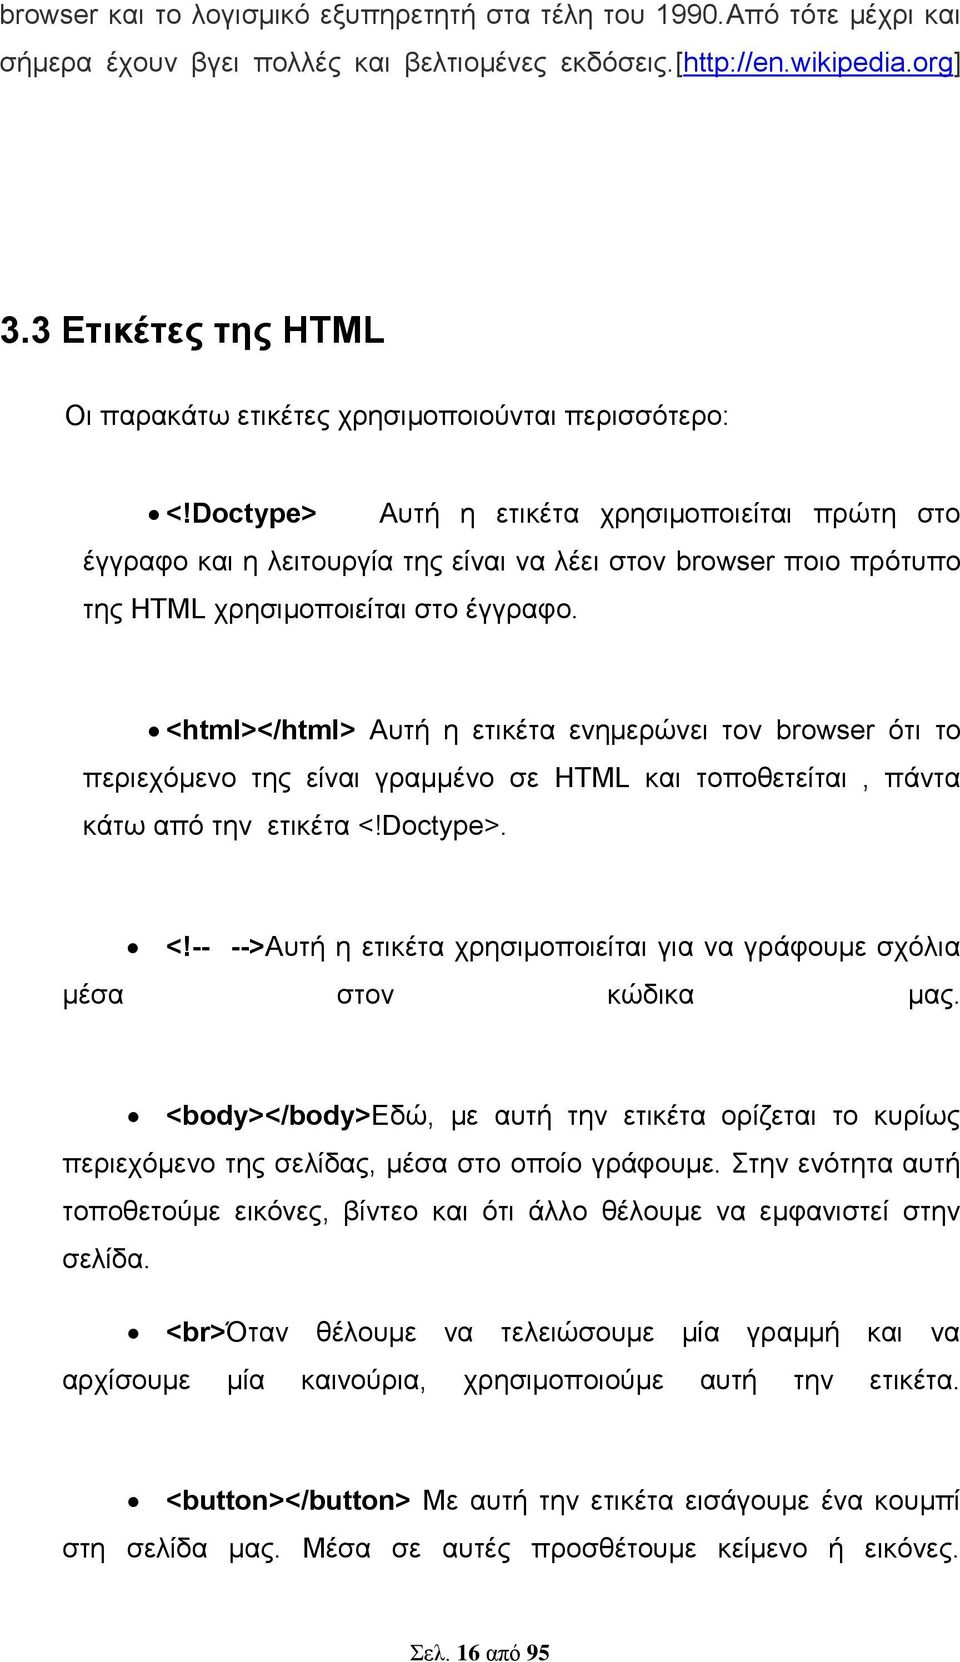 Doctype> Αυτή η ετικέτα χρησιμοποιείται πρώτη στο έγγραφο και η λειτουργία της είναι να λέει στον browser ποιο πρότυπο της ΗΤΜL χρησιμοποιείται στο έγγραφο.